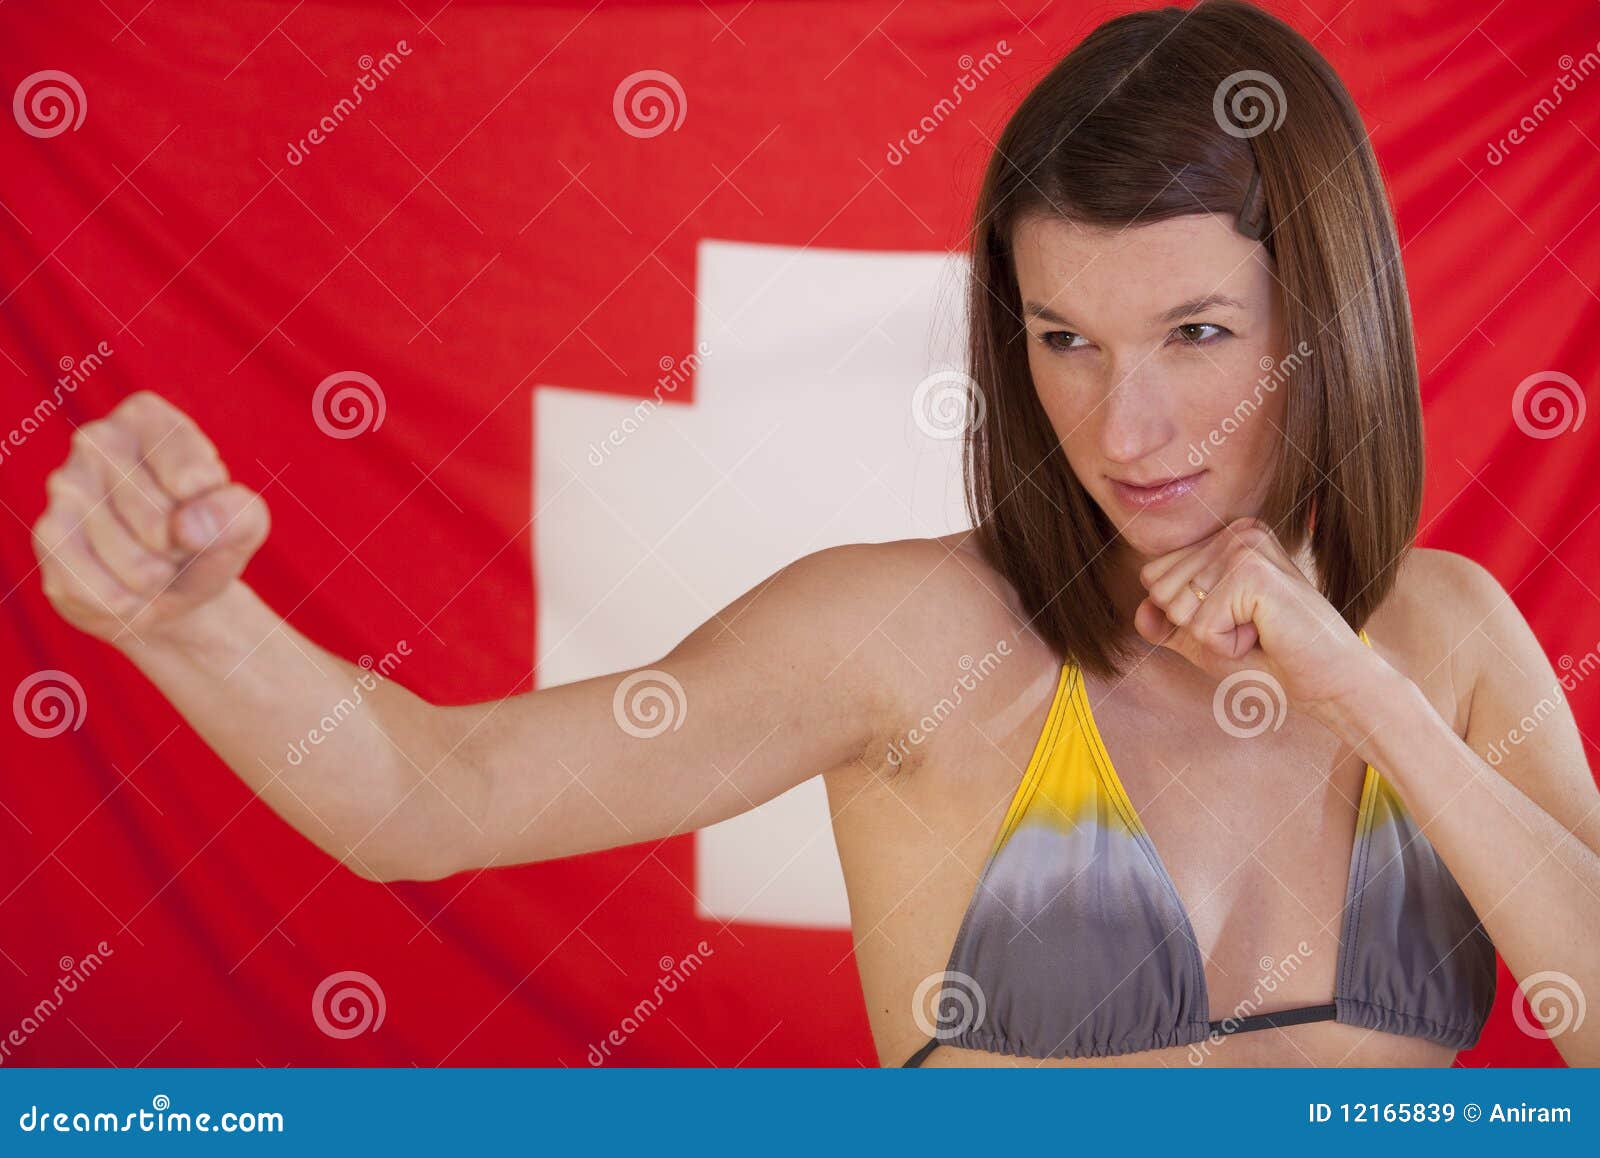 179 Bikini Boxing Woman Stock Photos - Free & Royalty-Free Stock Photos  from Dreamstime